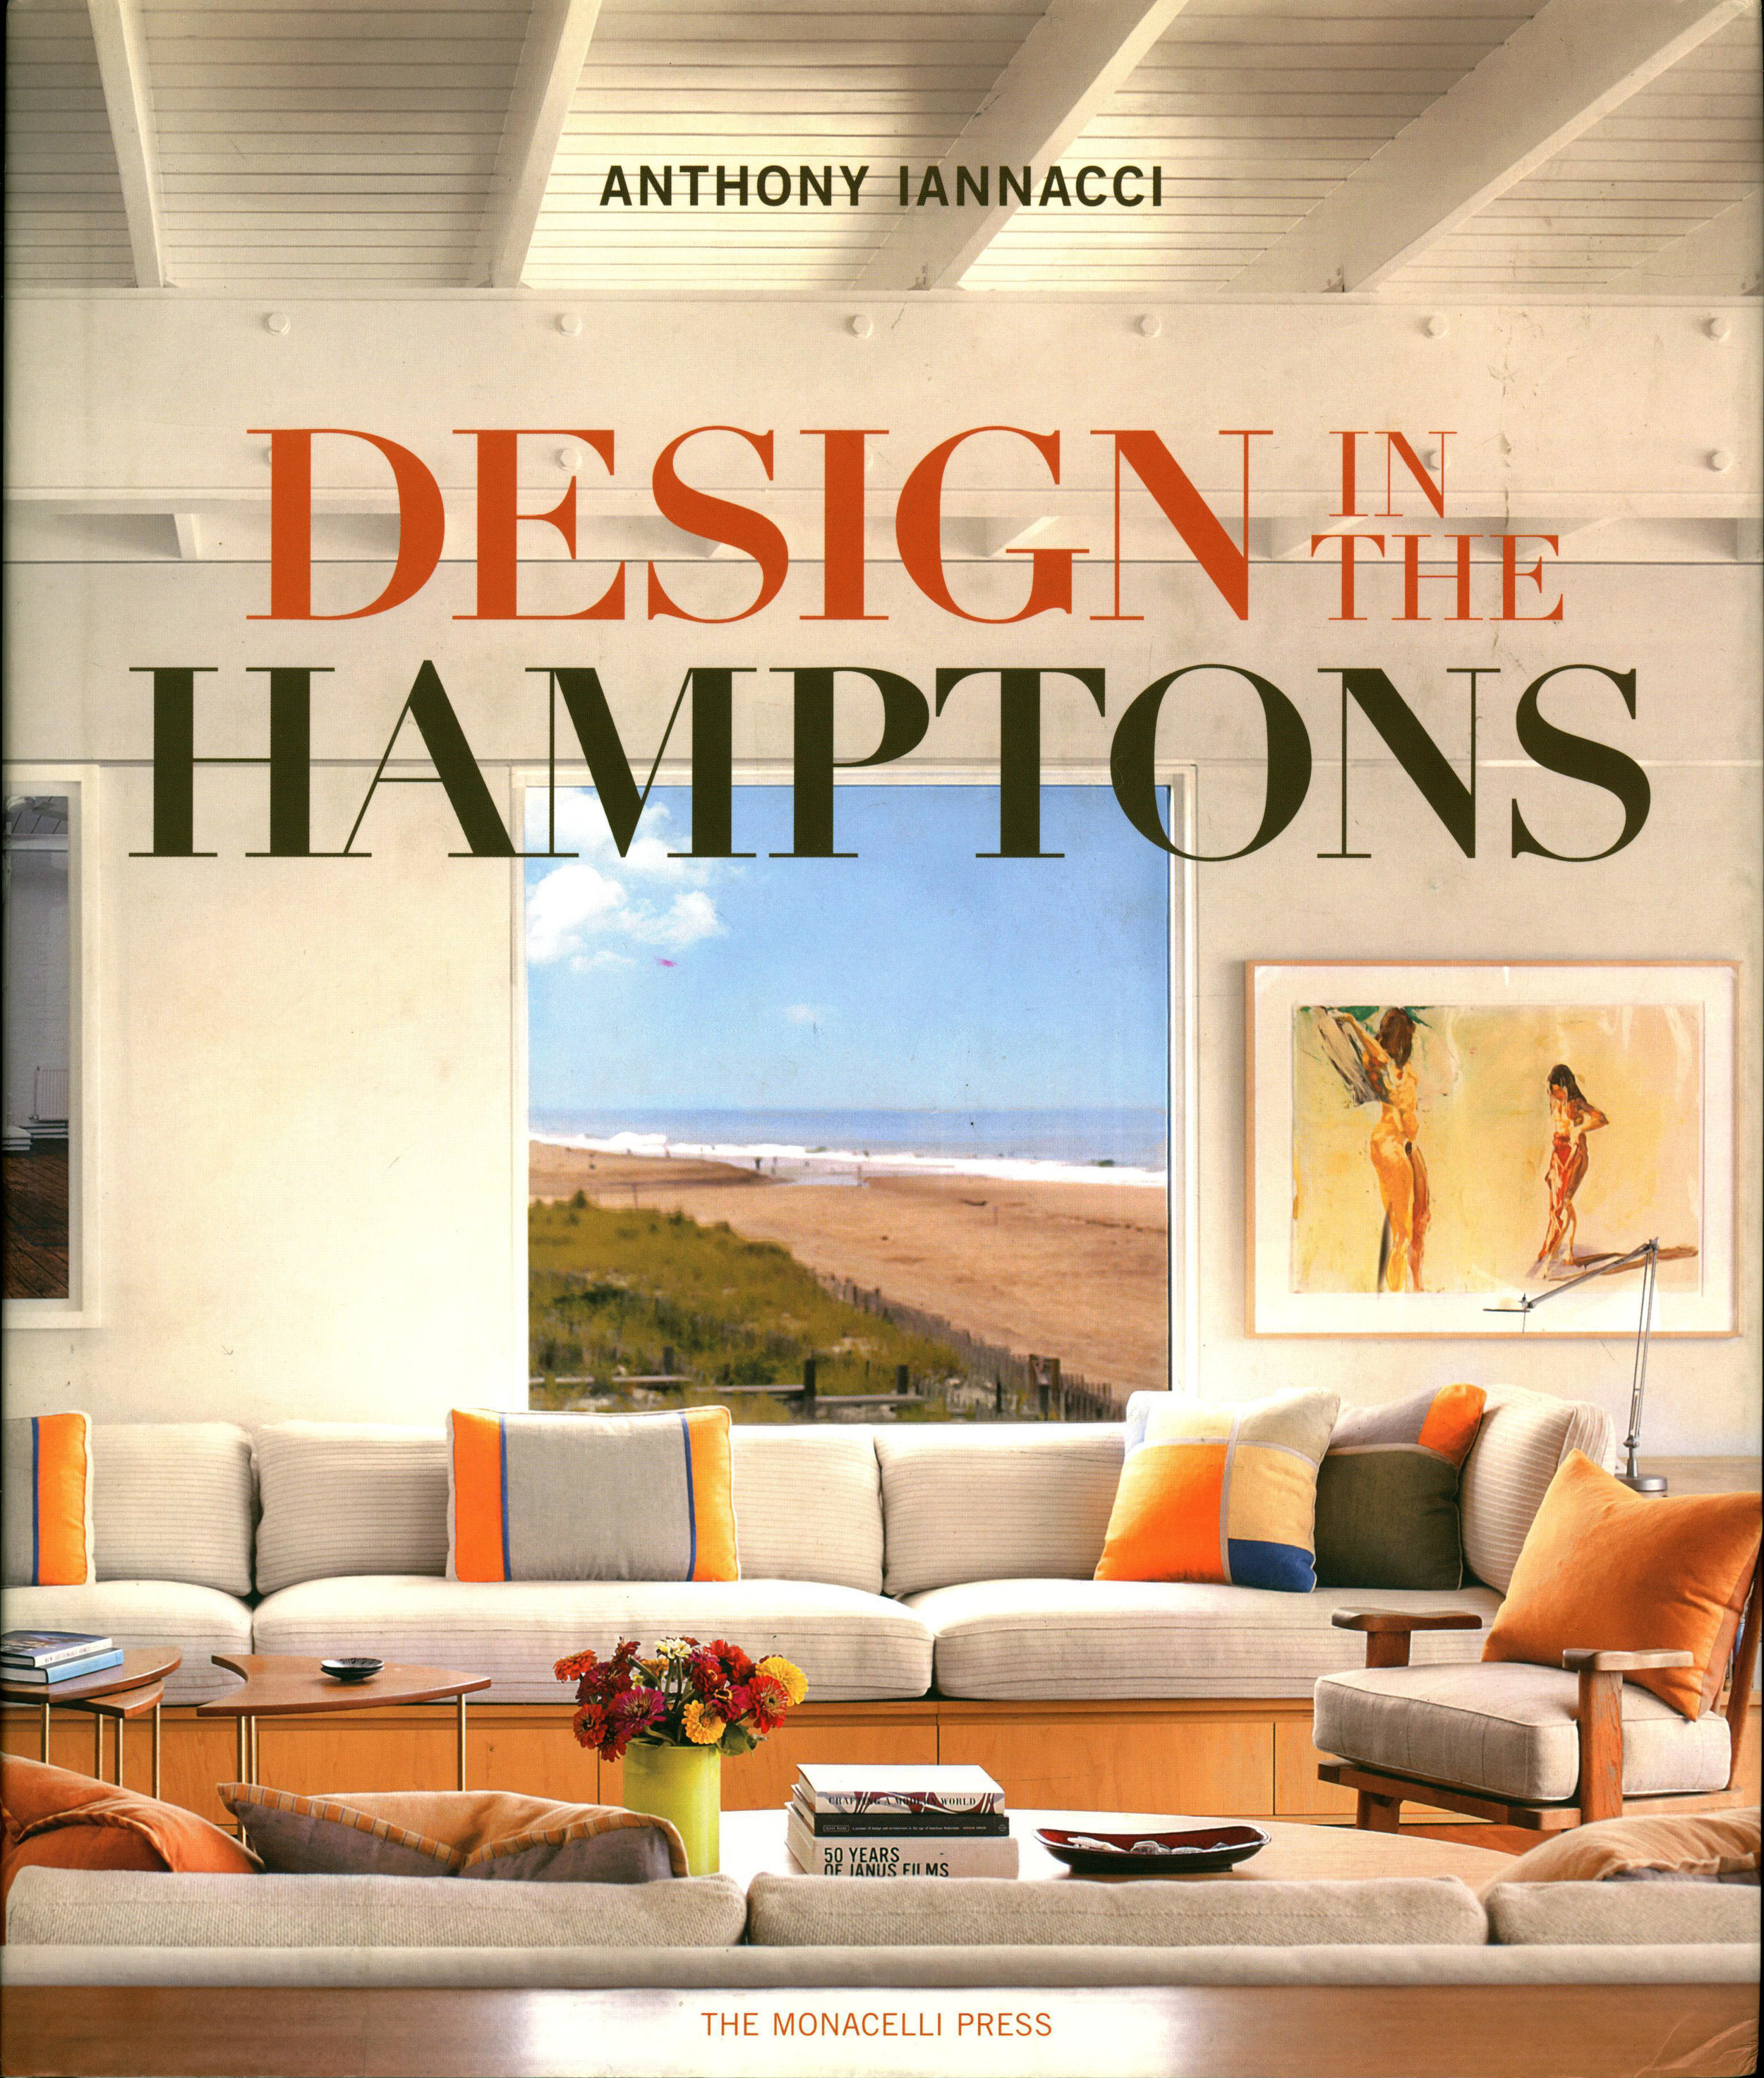 Design in the hamptons cover.jpg